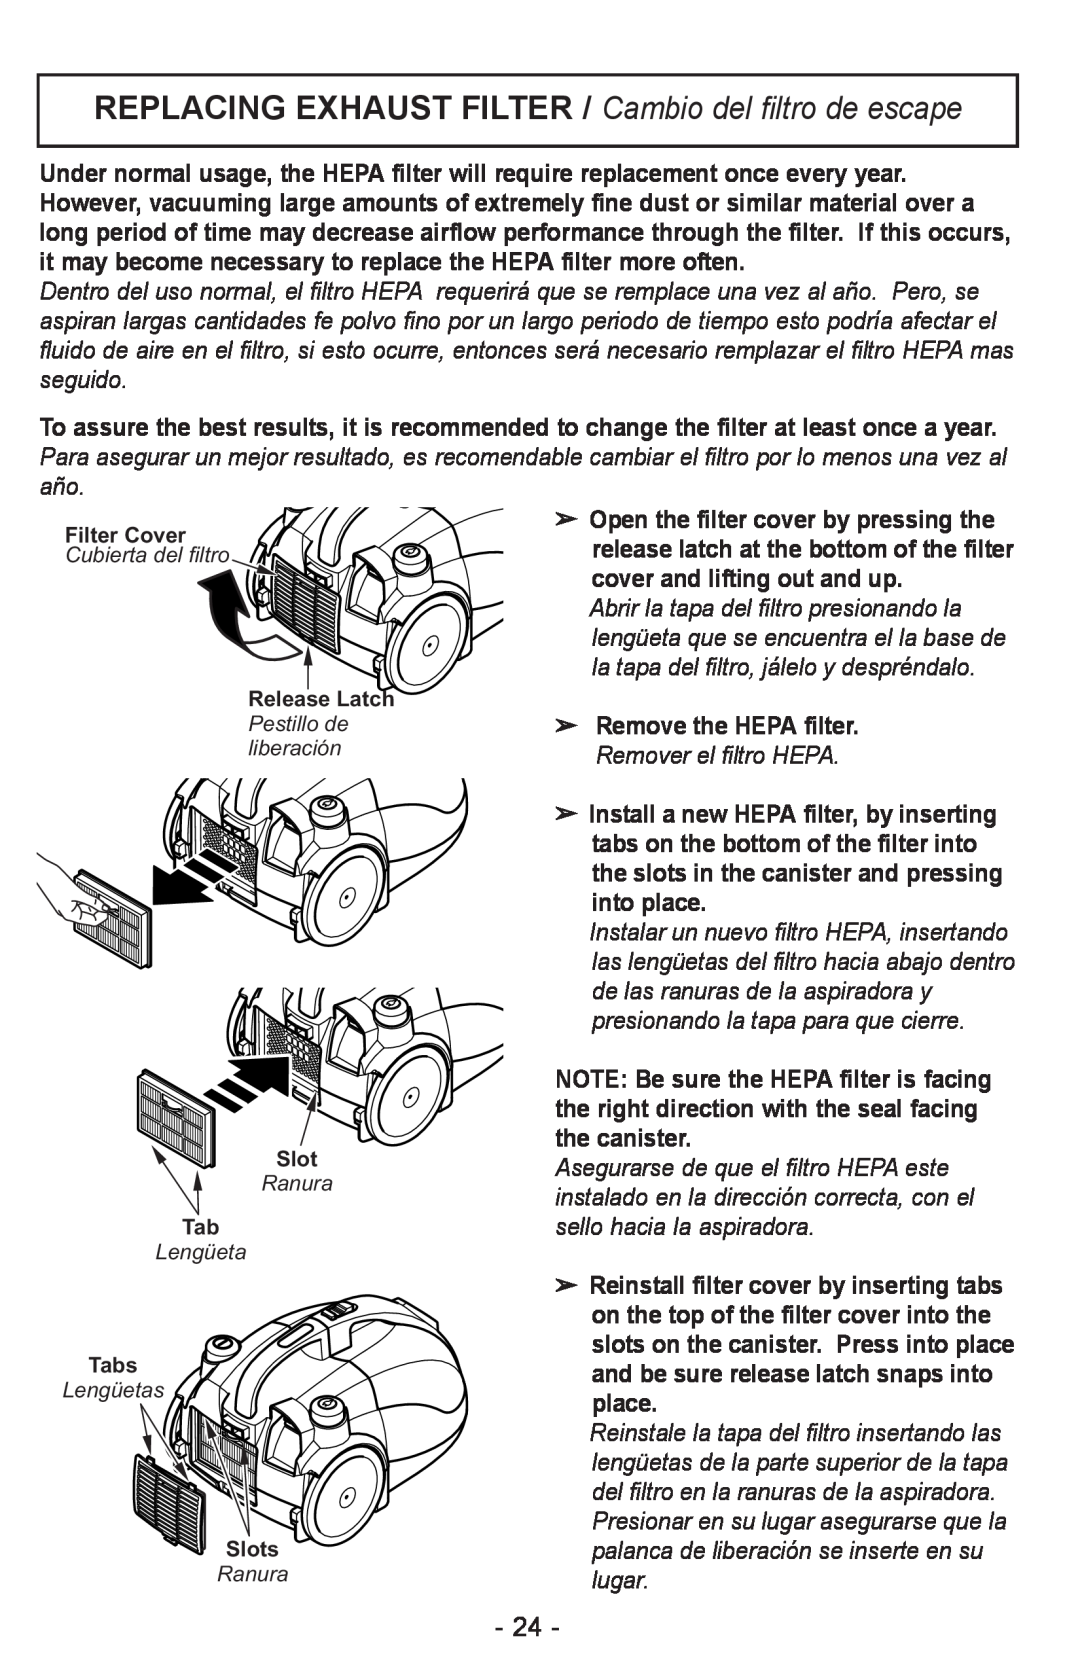 Panasonic MC-CL310 manual Remove the HEPA filter. Remover el filtro HEPA 